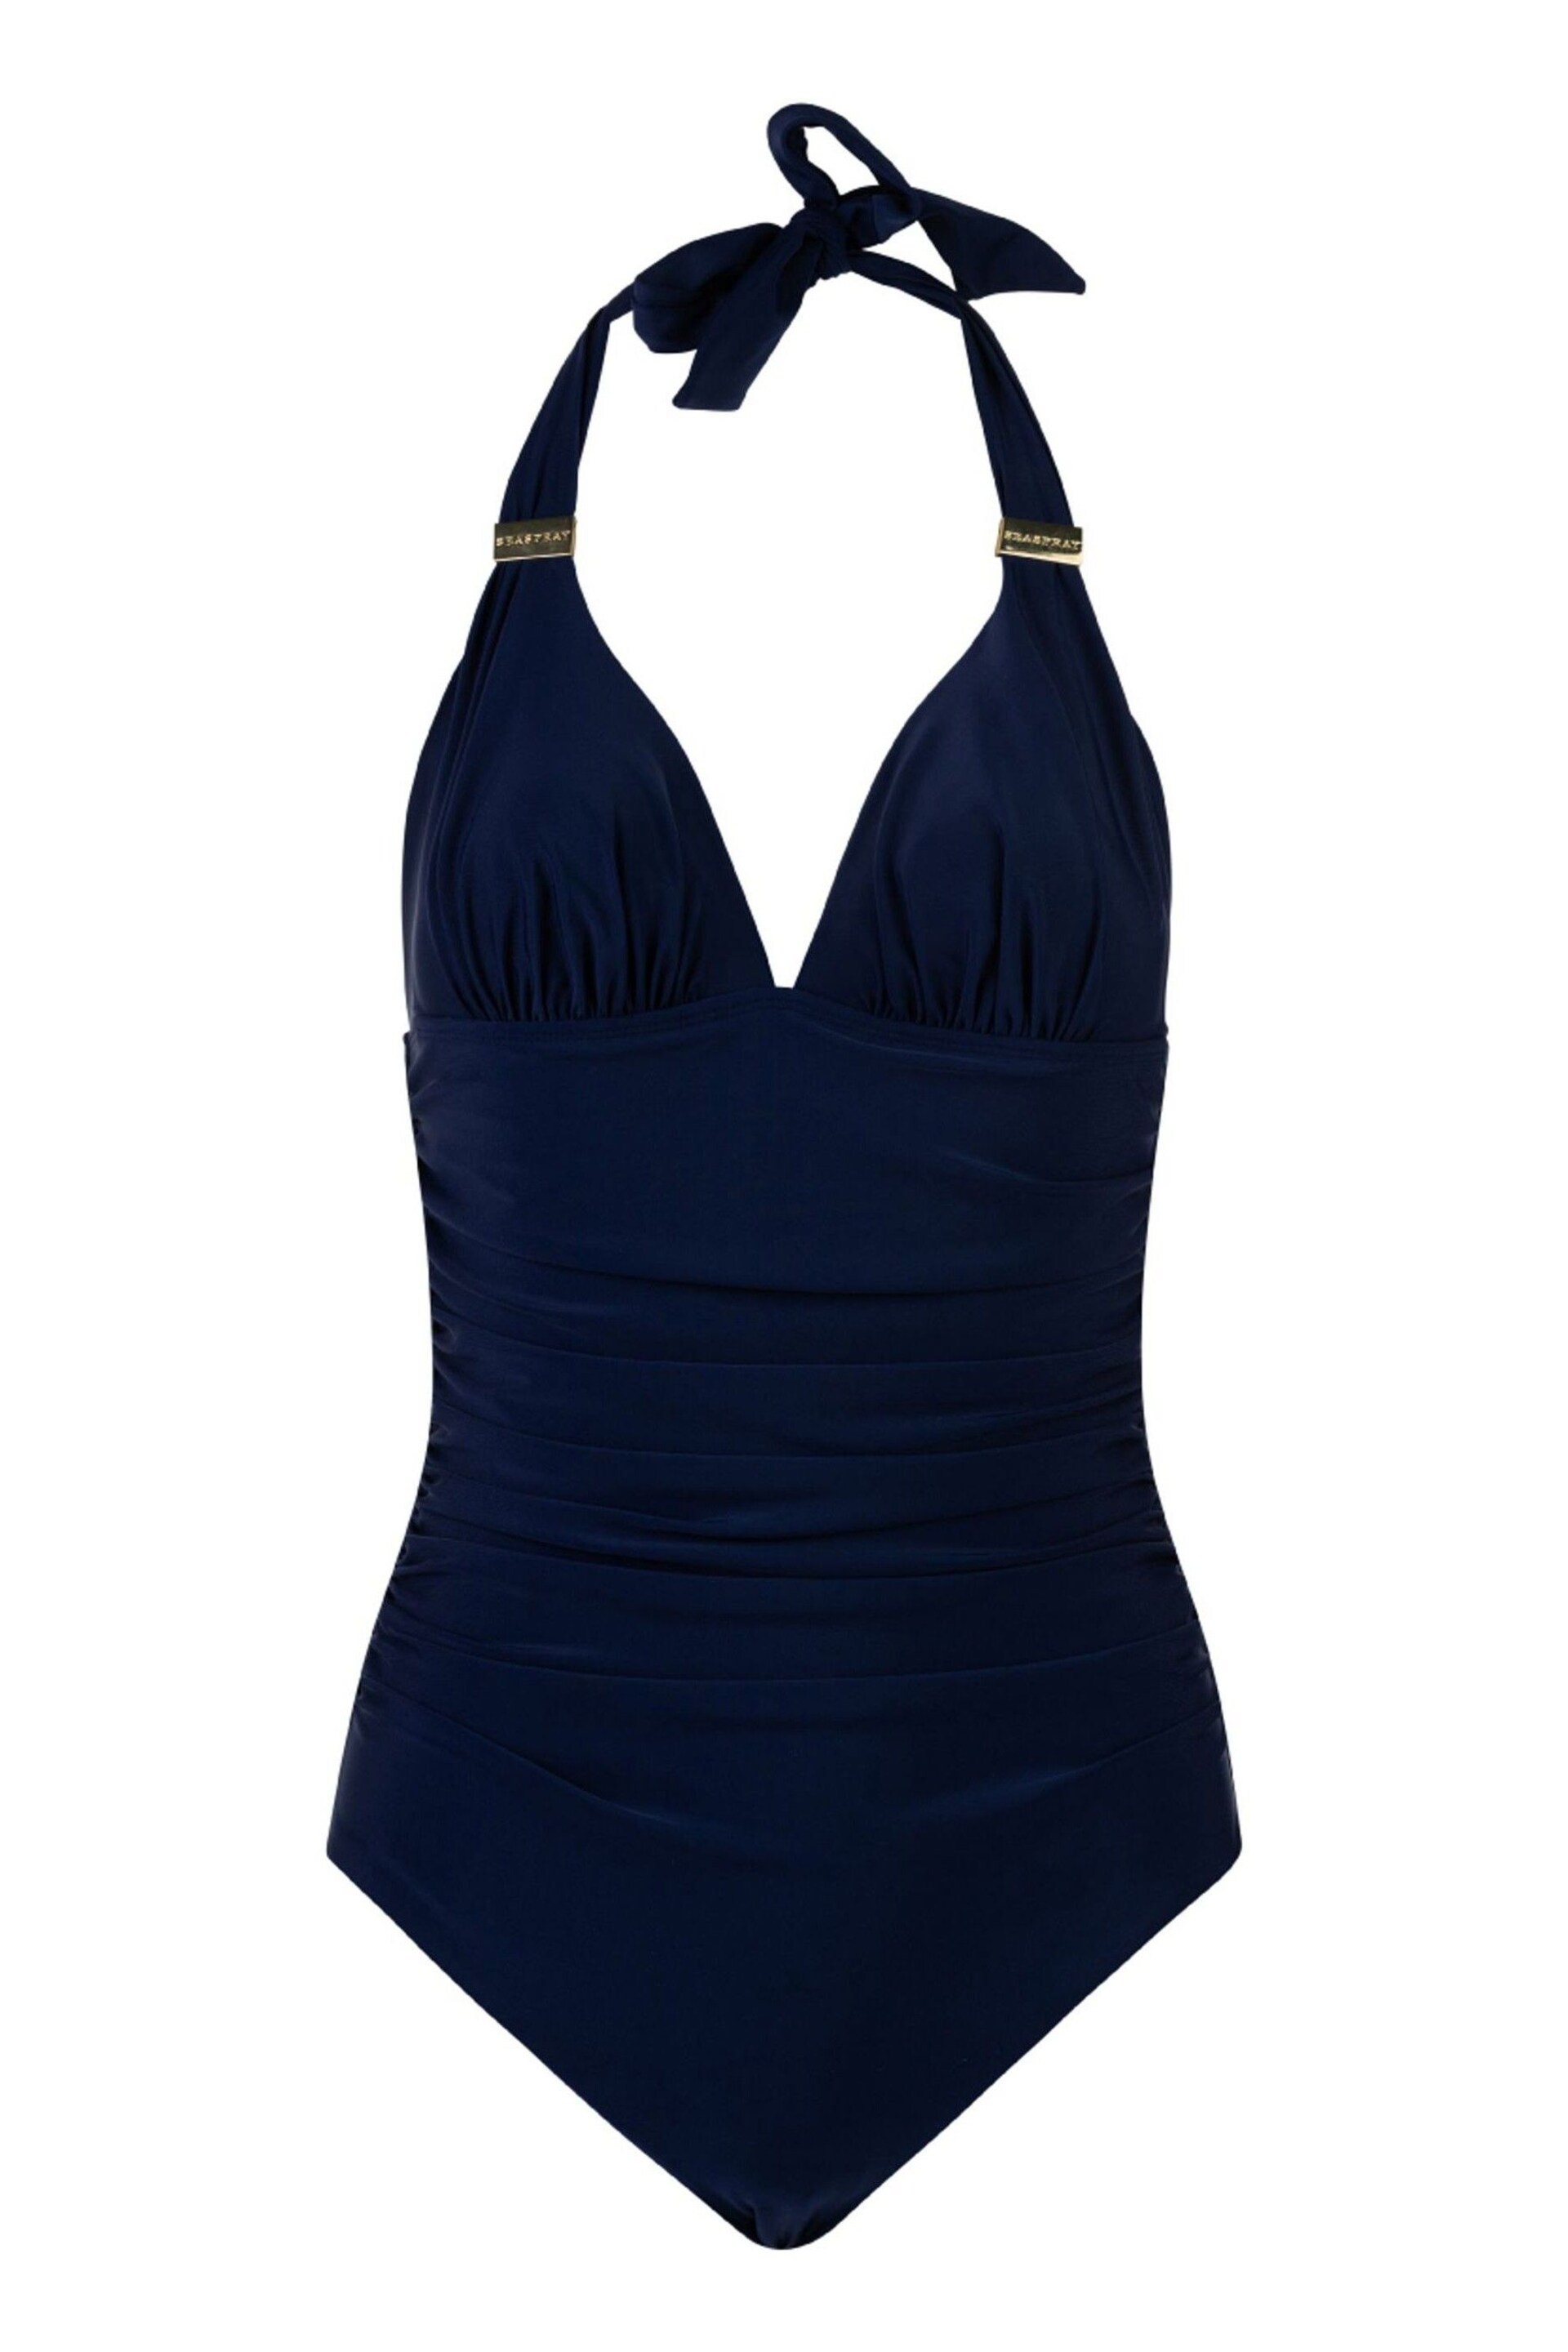 Seaspray Navy Blue Audrey Hourglass Halter Regular Length Swimsuit - Image 3 of 3